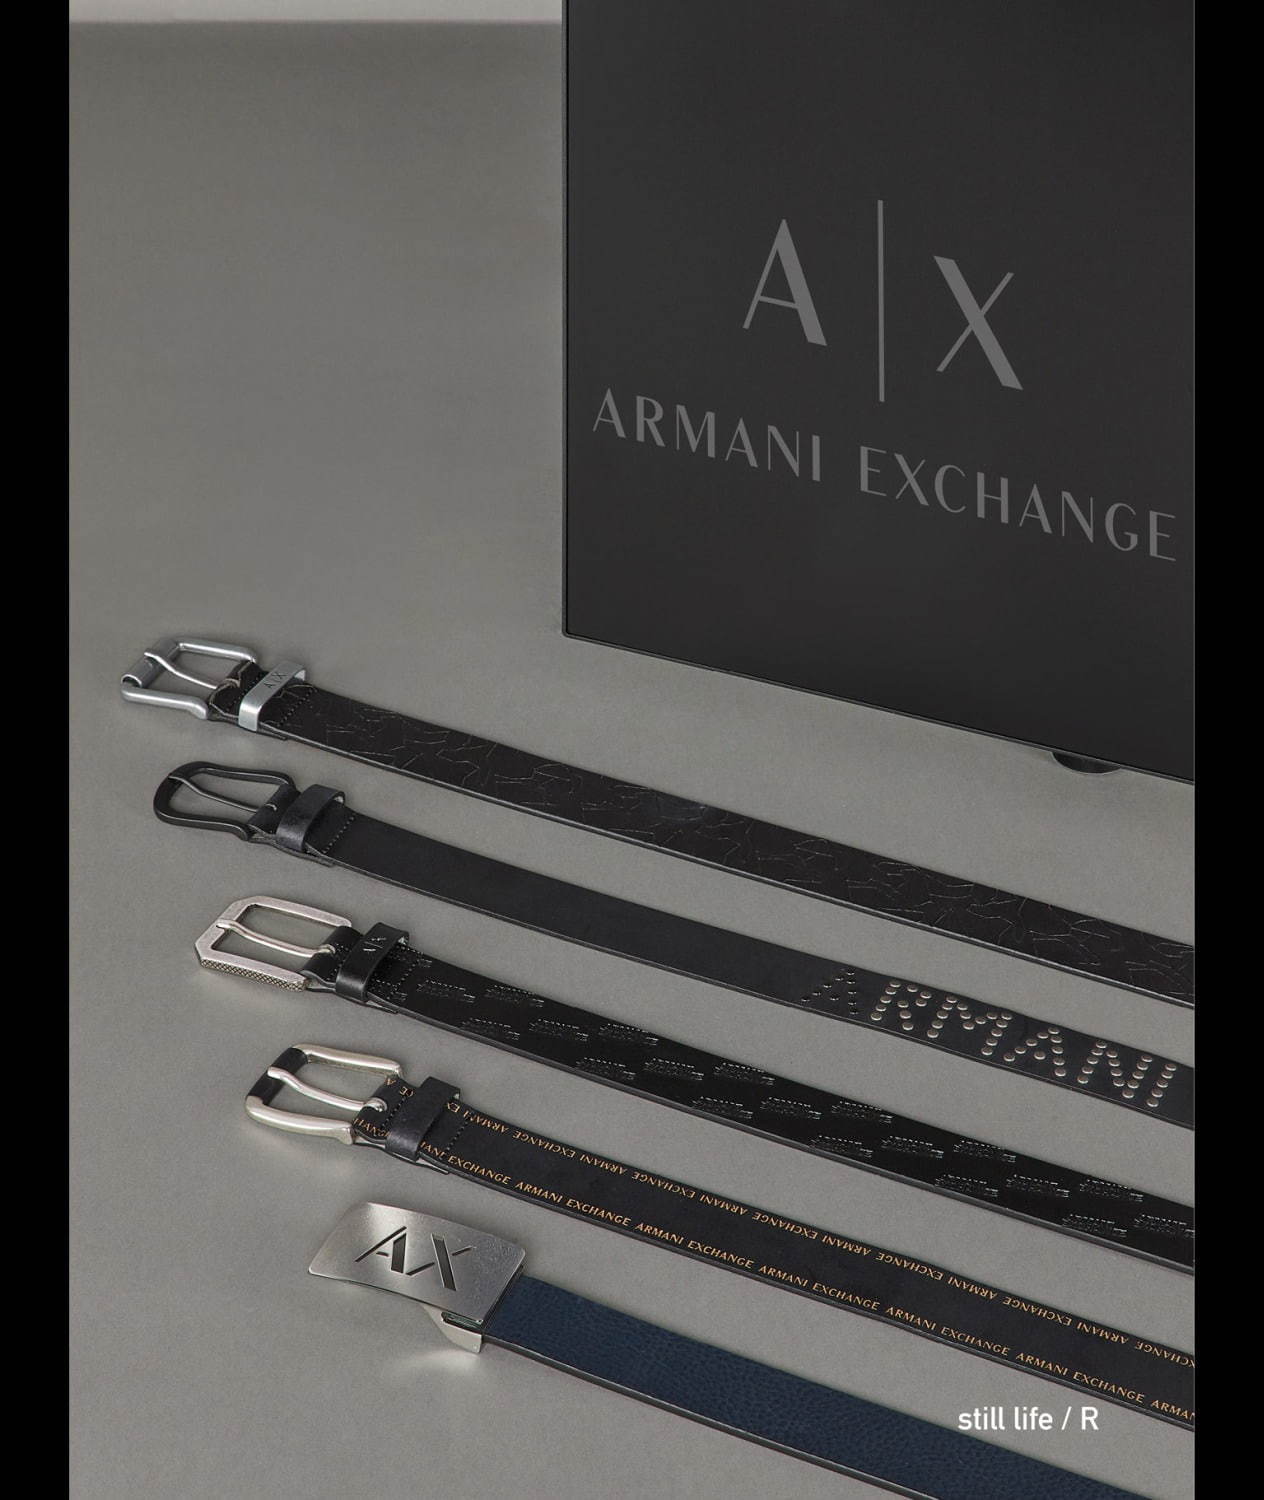 A|X アルマーニ エクスチェンジ(A|X ARMANI EXCHANGE) 2020-21年秋冬メンズコレクション  - 写真74